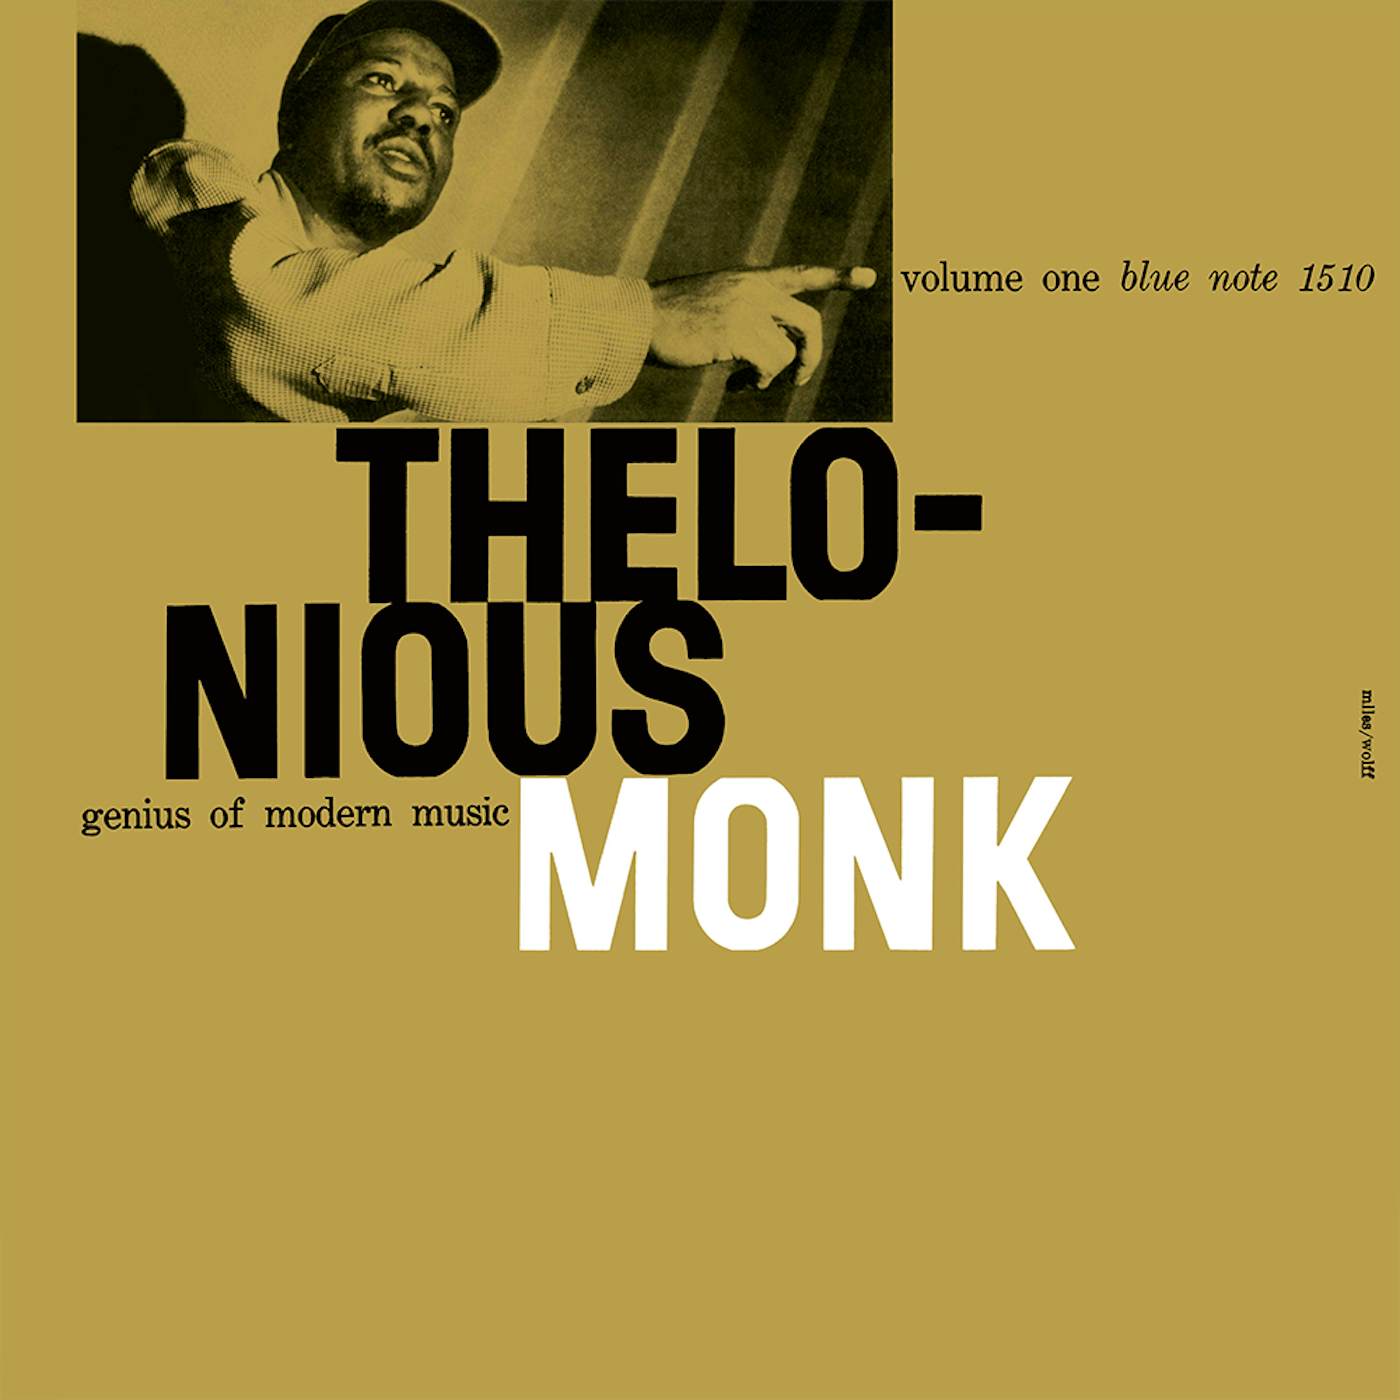 Thelonious Monk - Genius Of Modern Music: Vol 1 LP (Blue Note Records 75th Anniversary Reissue Series) (Vinyl)